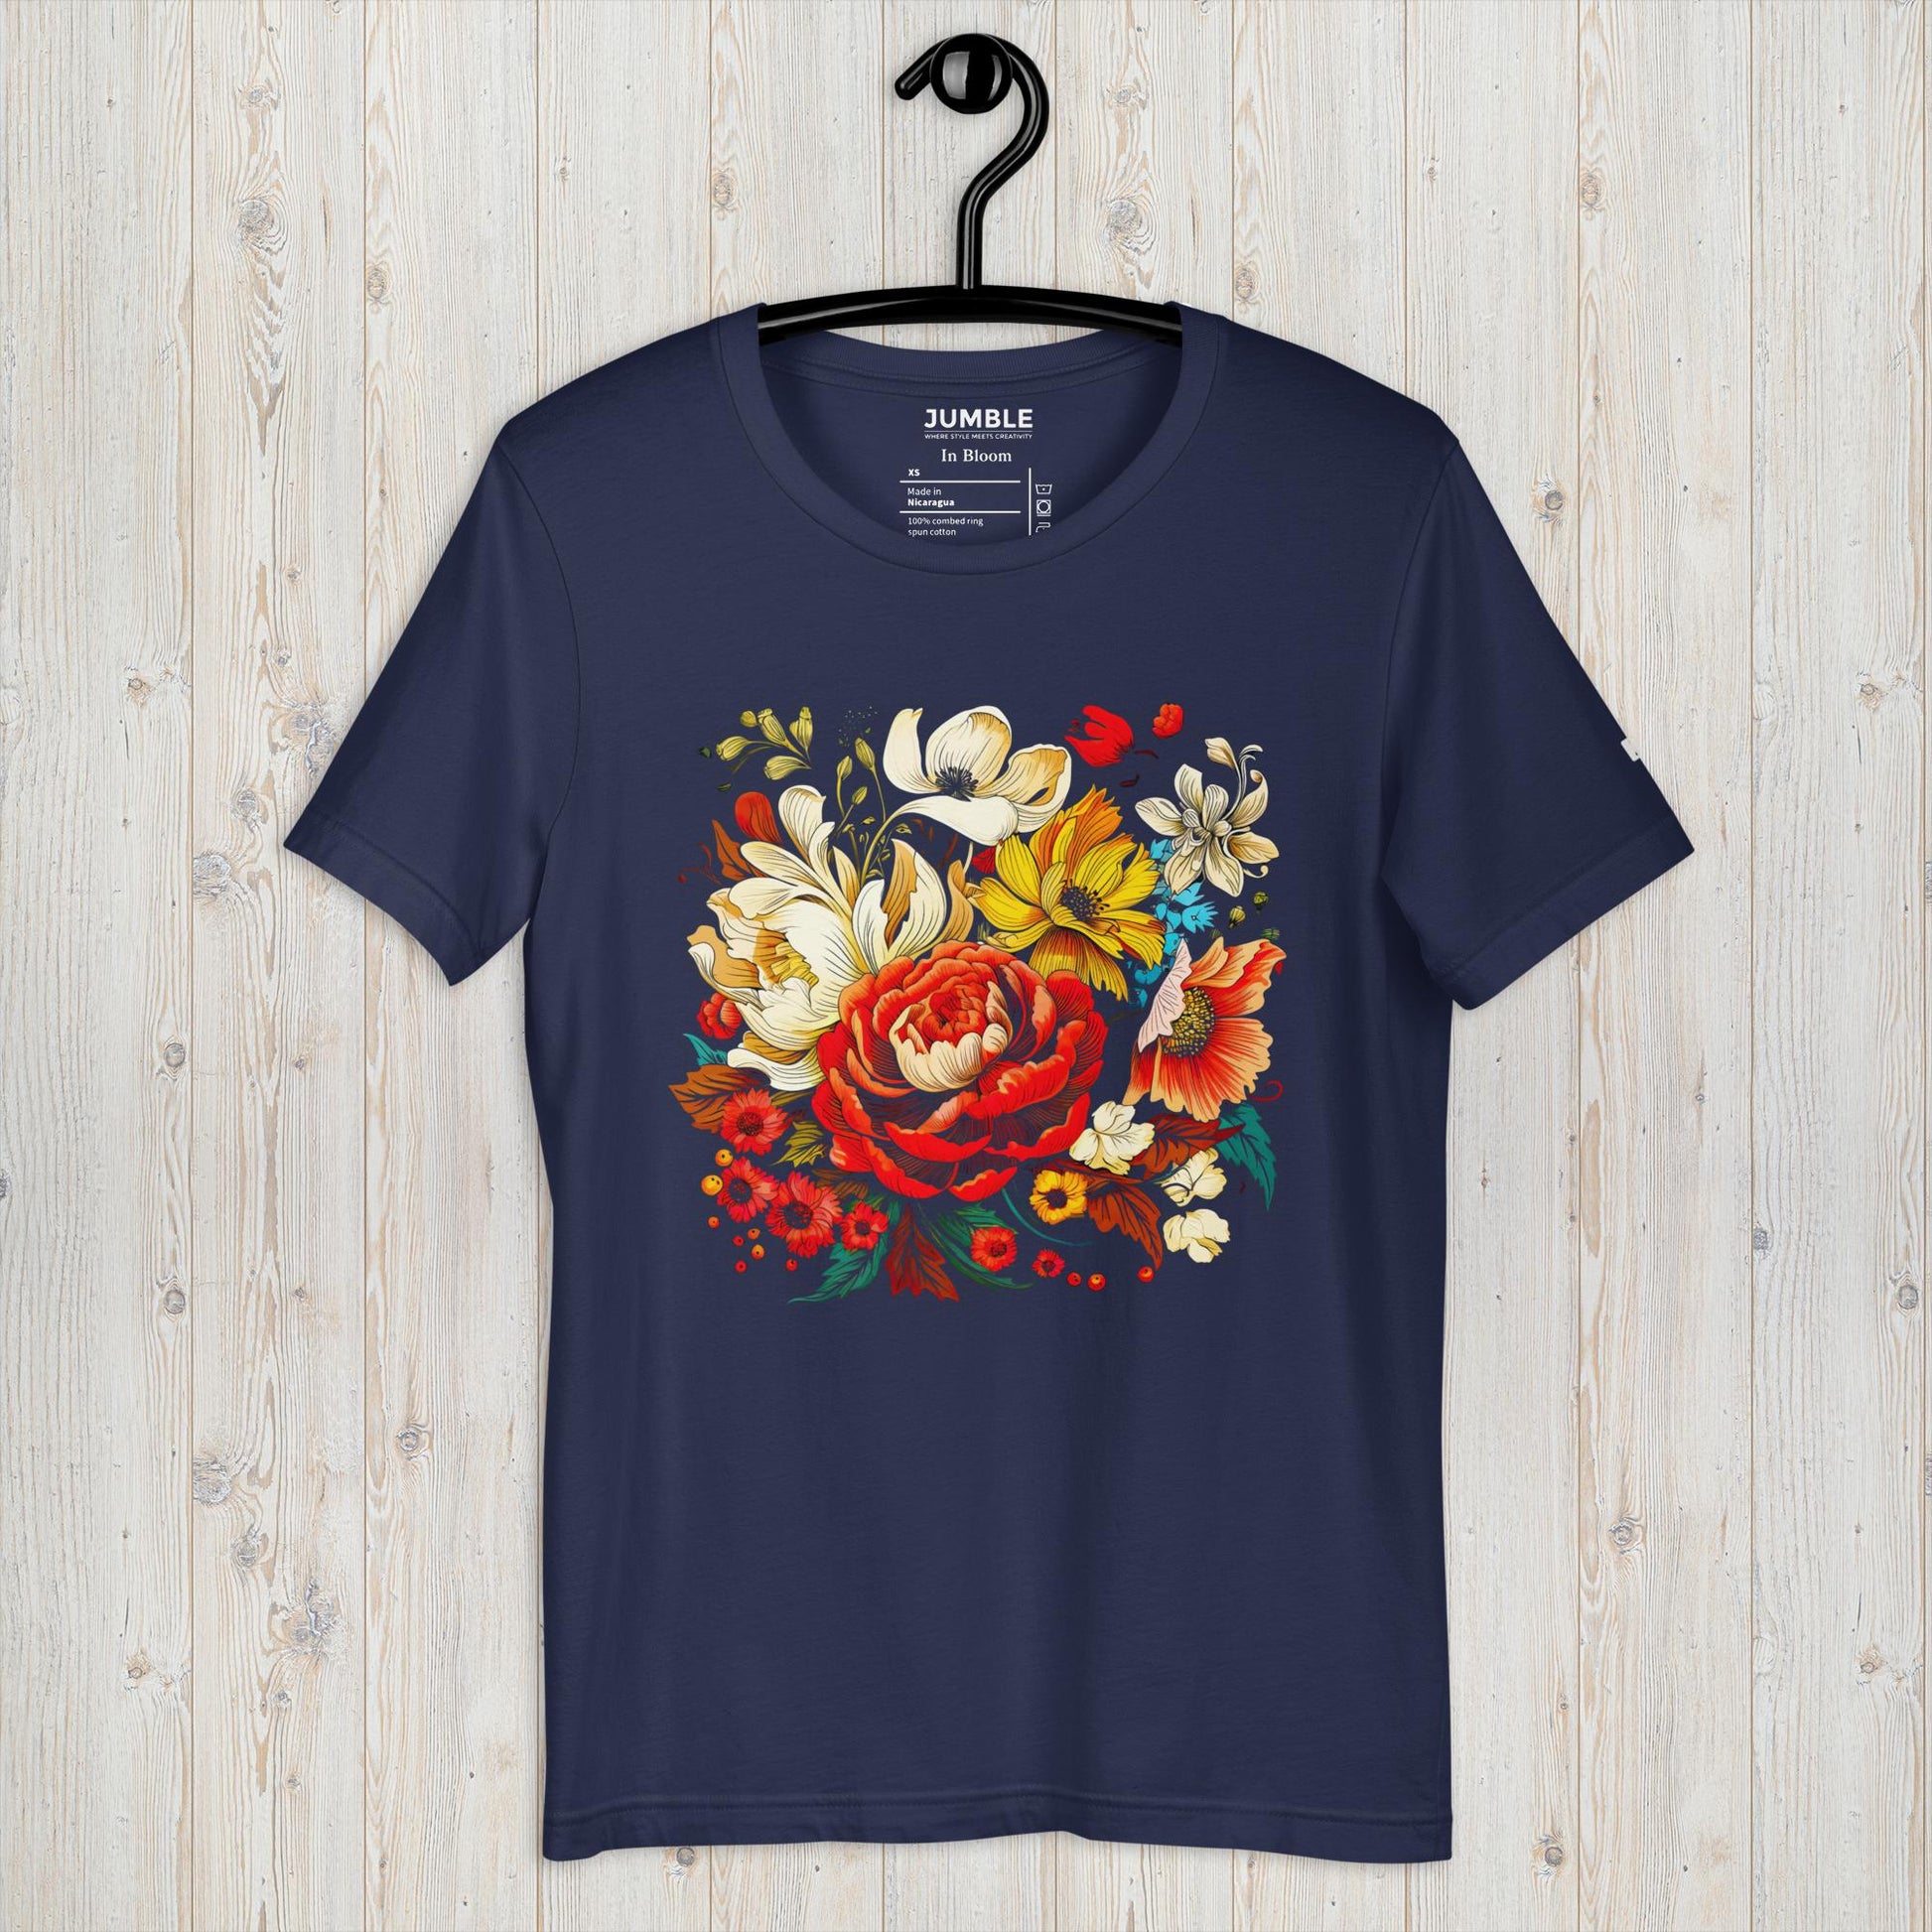 In Bloom Unisex T-Shirt - Navy Color - On Hanger